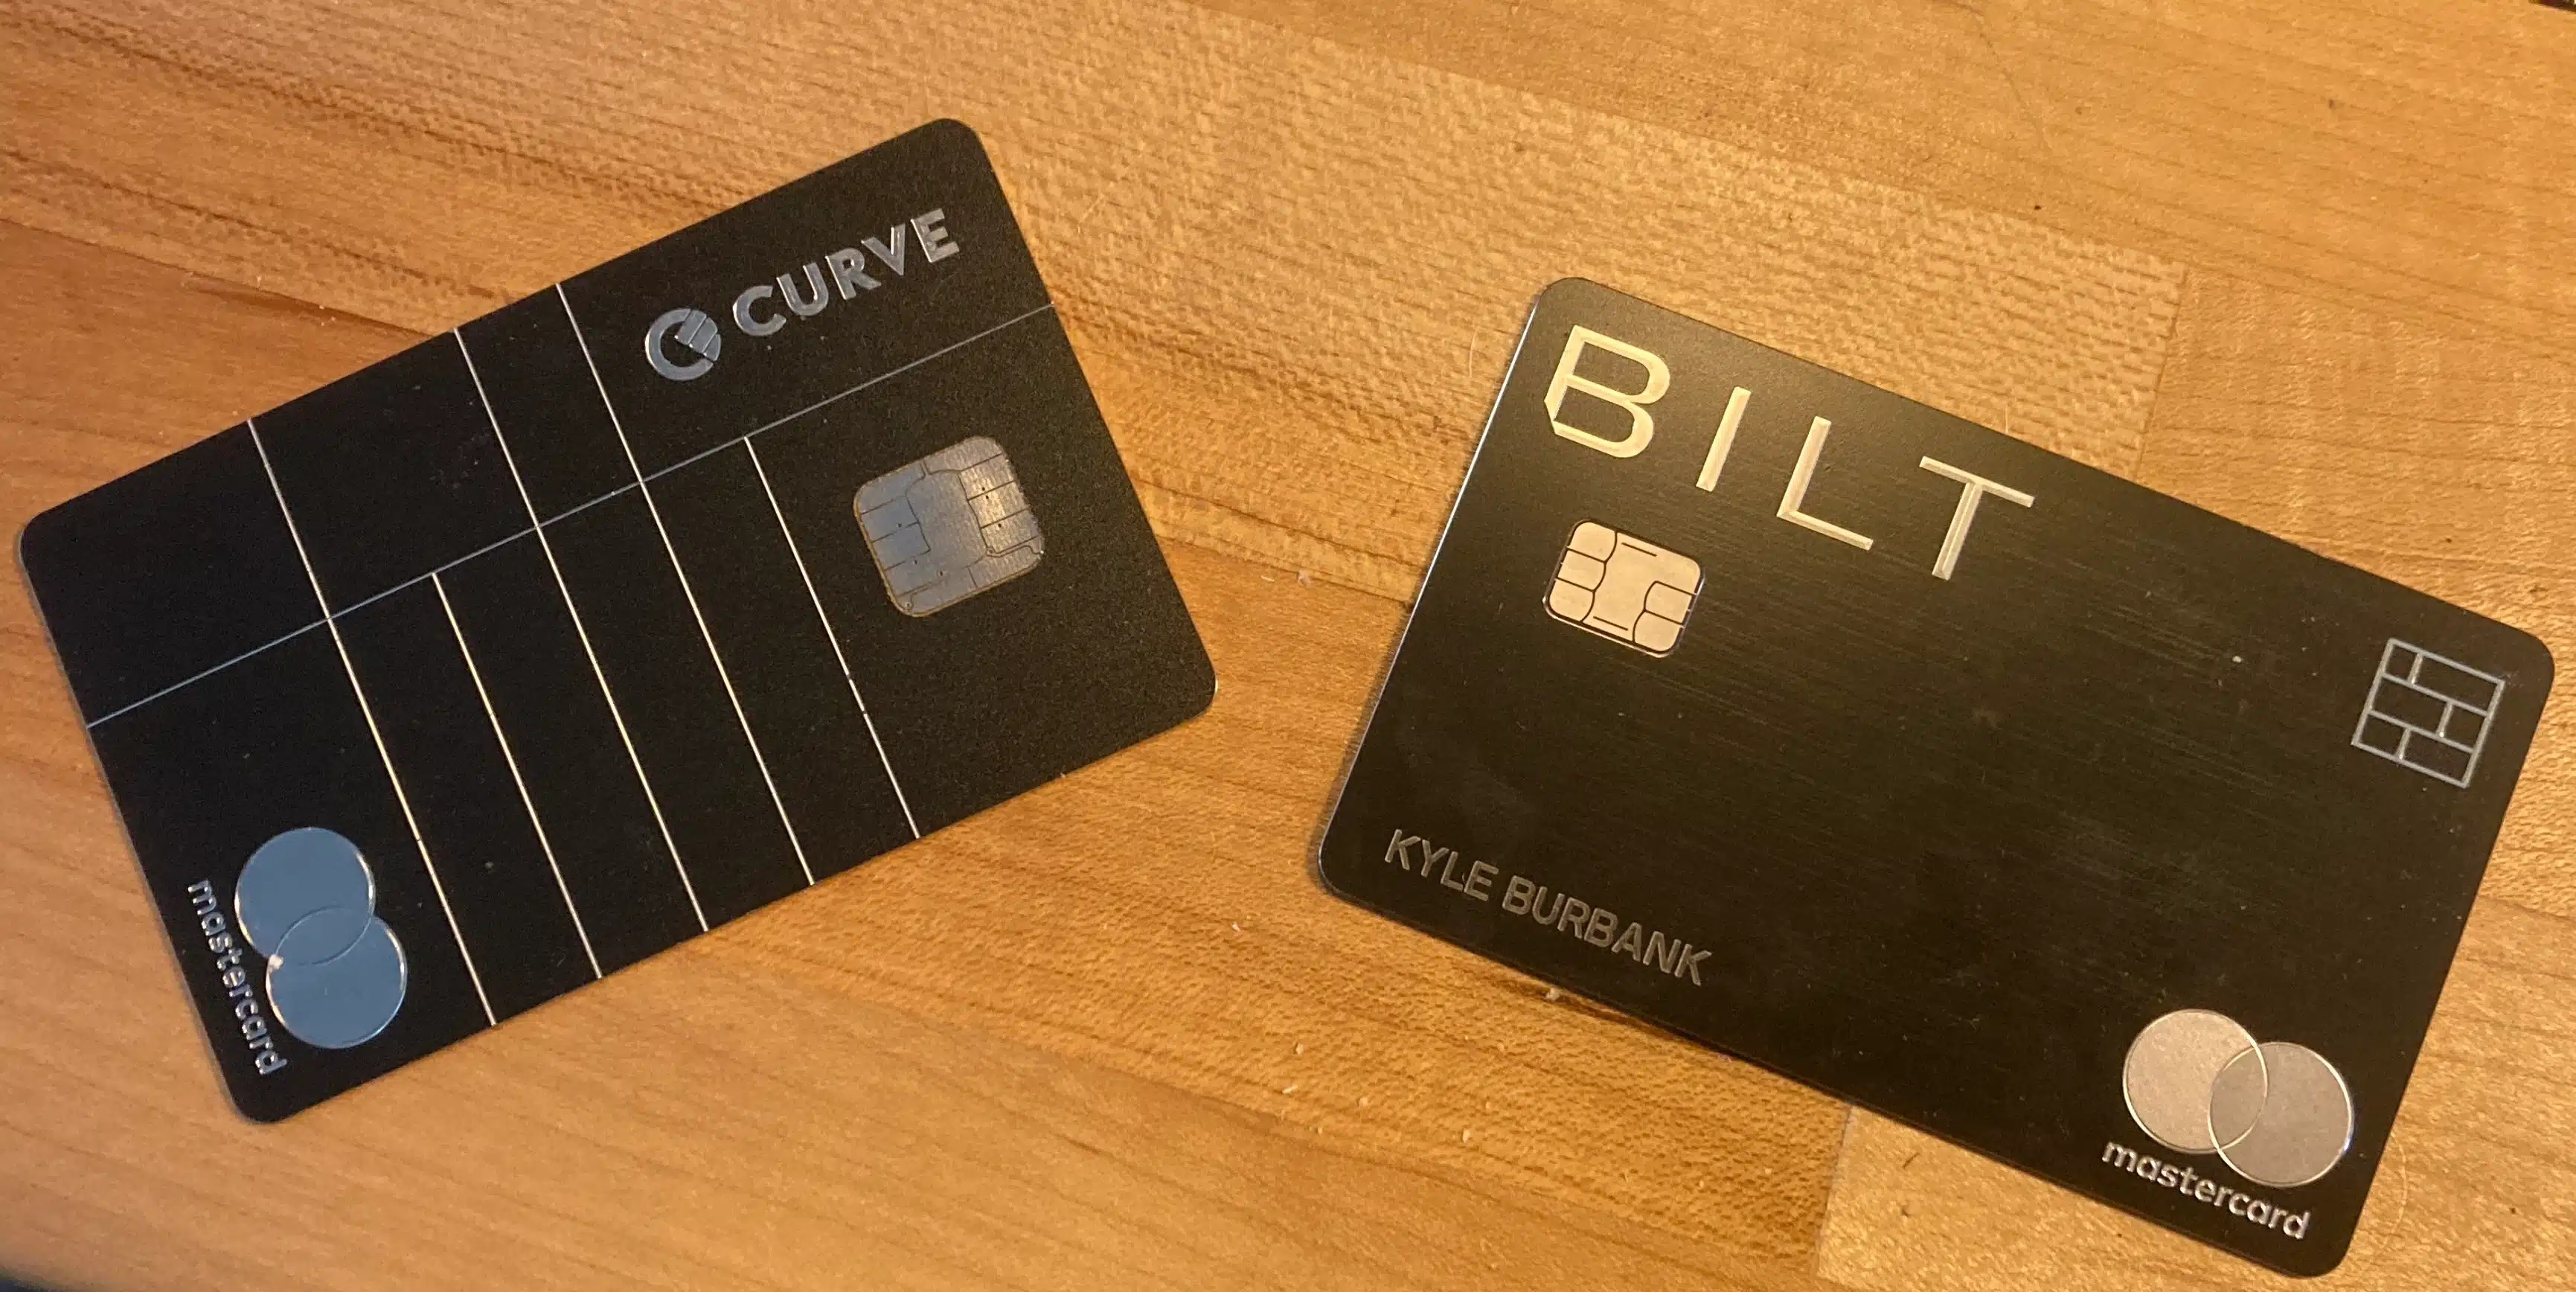 Bilt and Curve credit cards